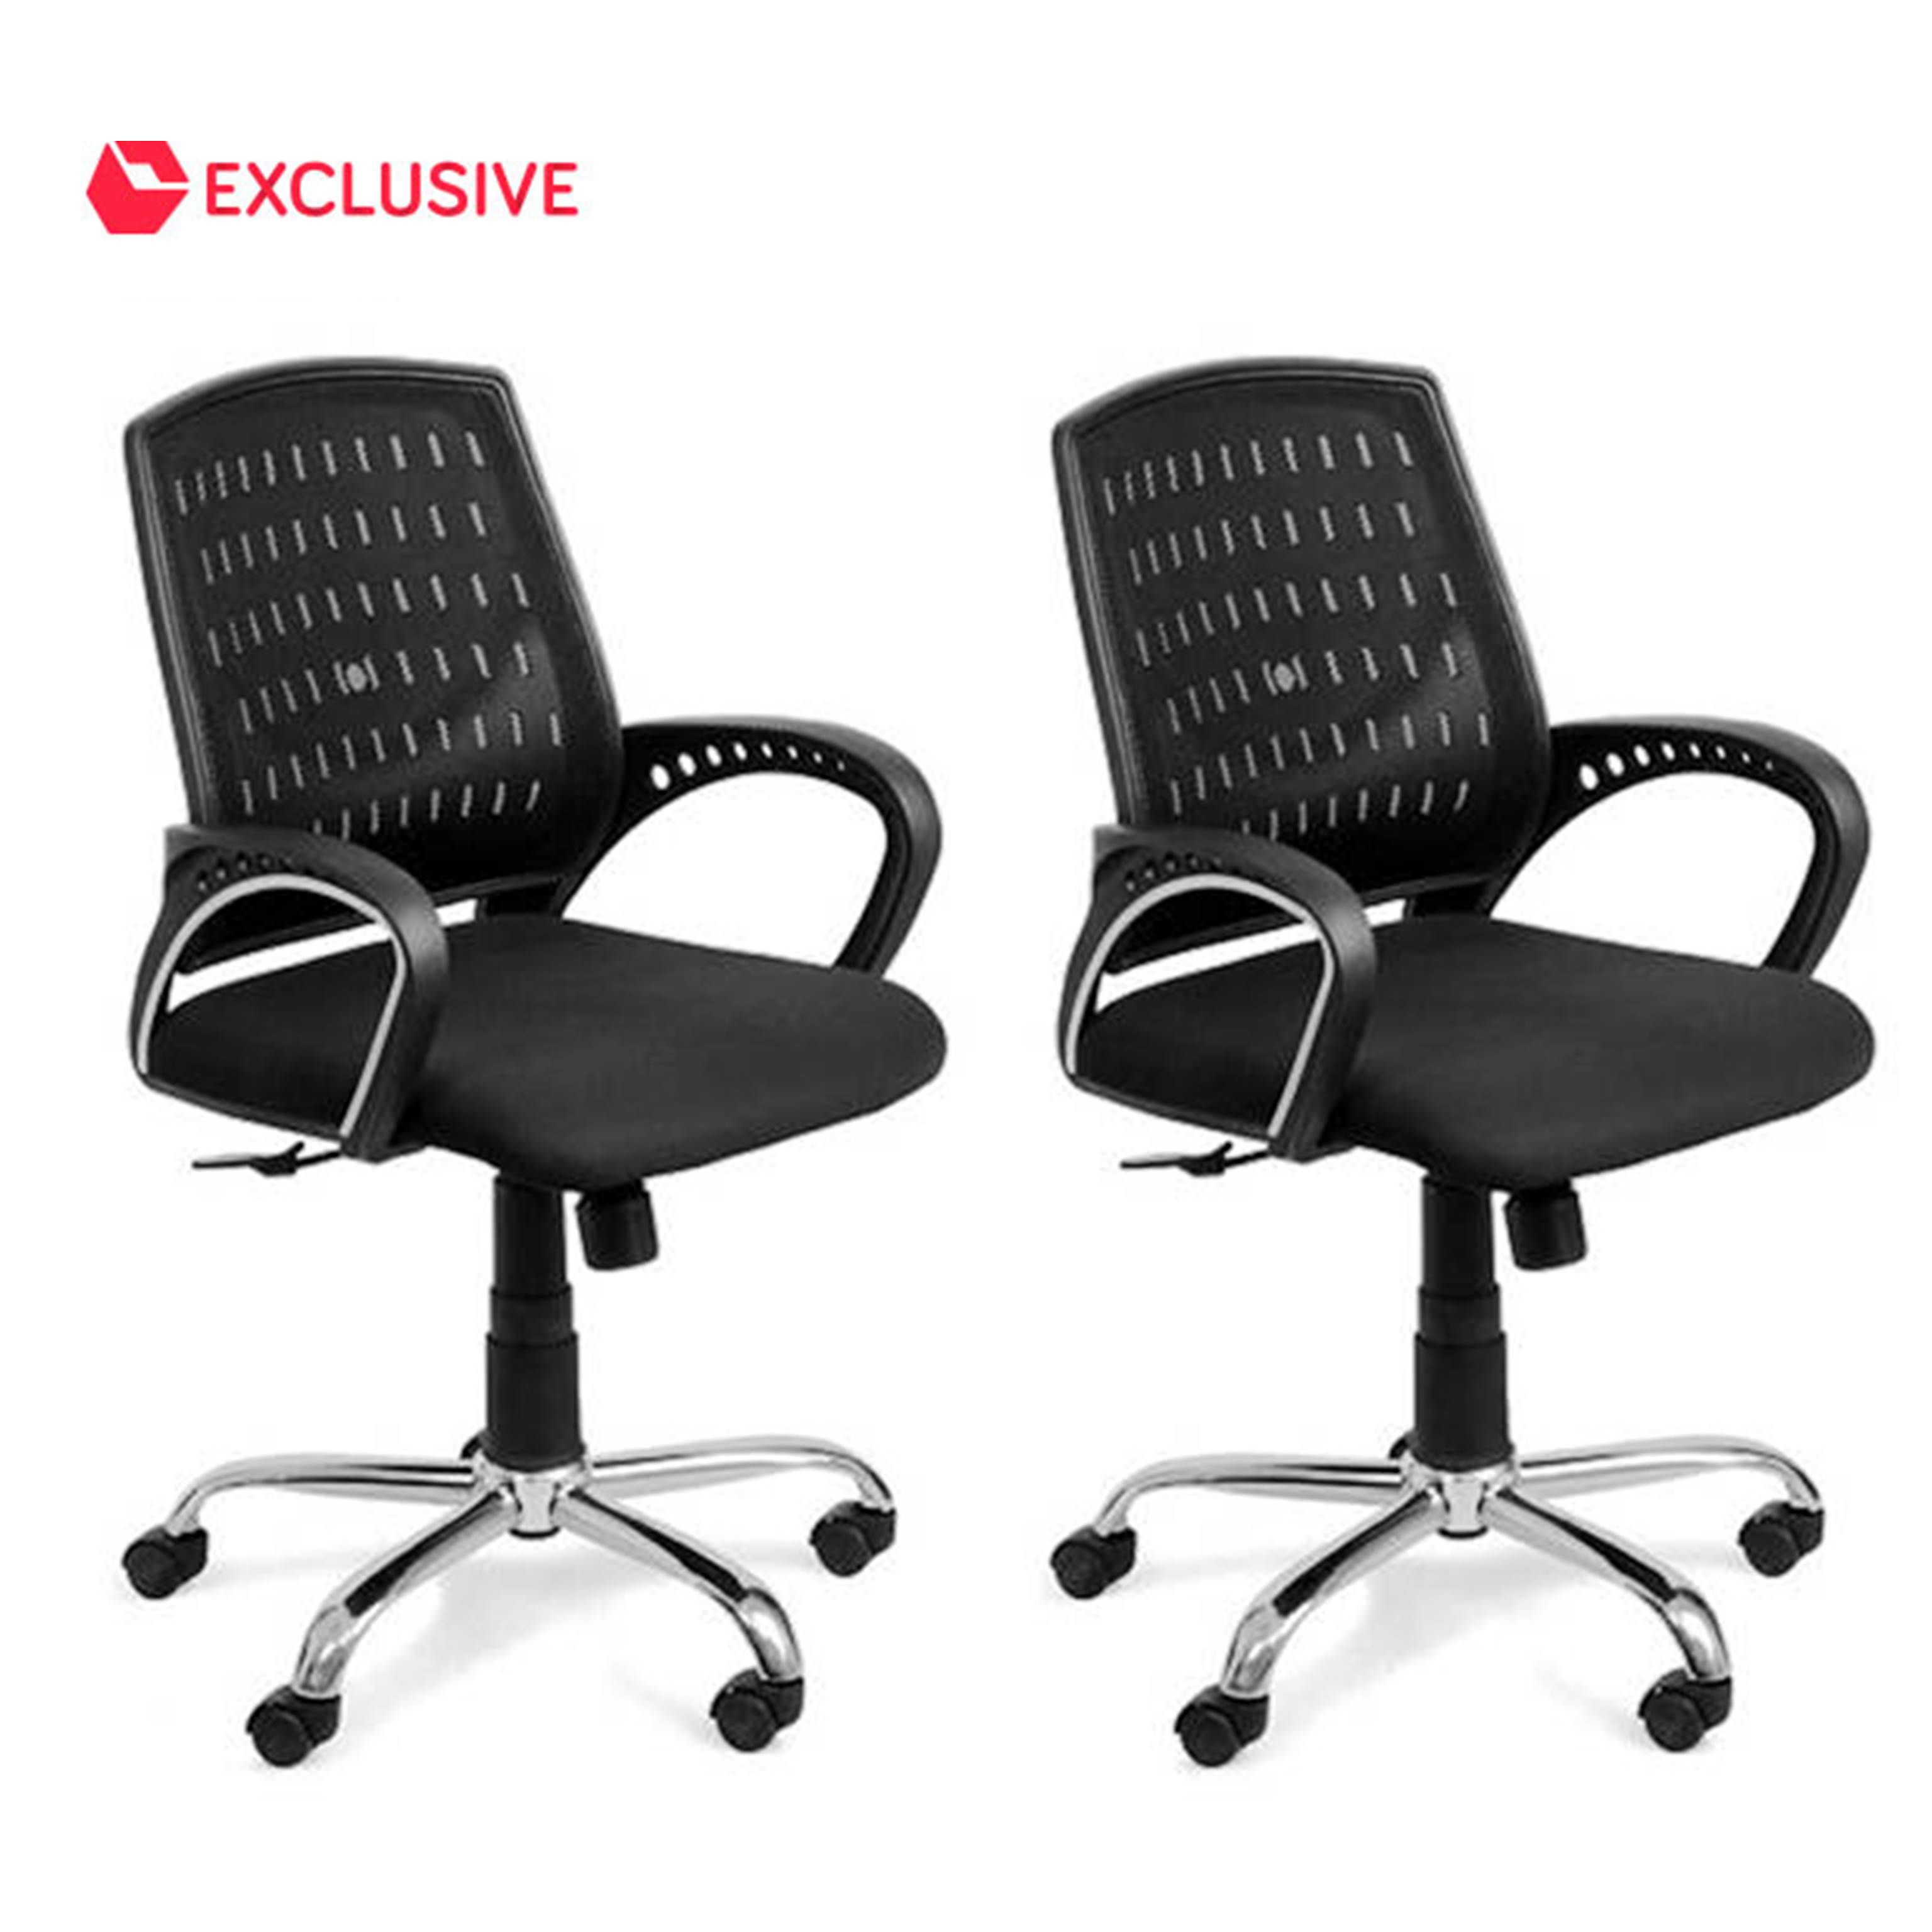 Buy 1 Mesh Back Office Chair Get 1 Free: Buy Online at Best Price in